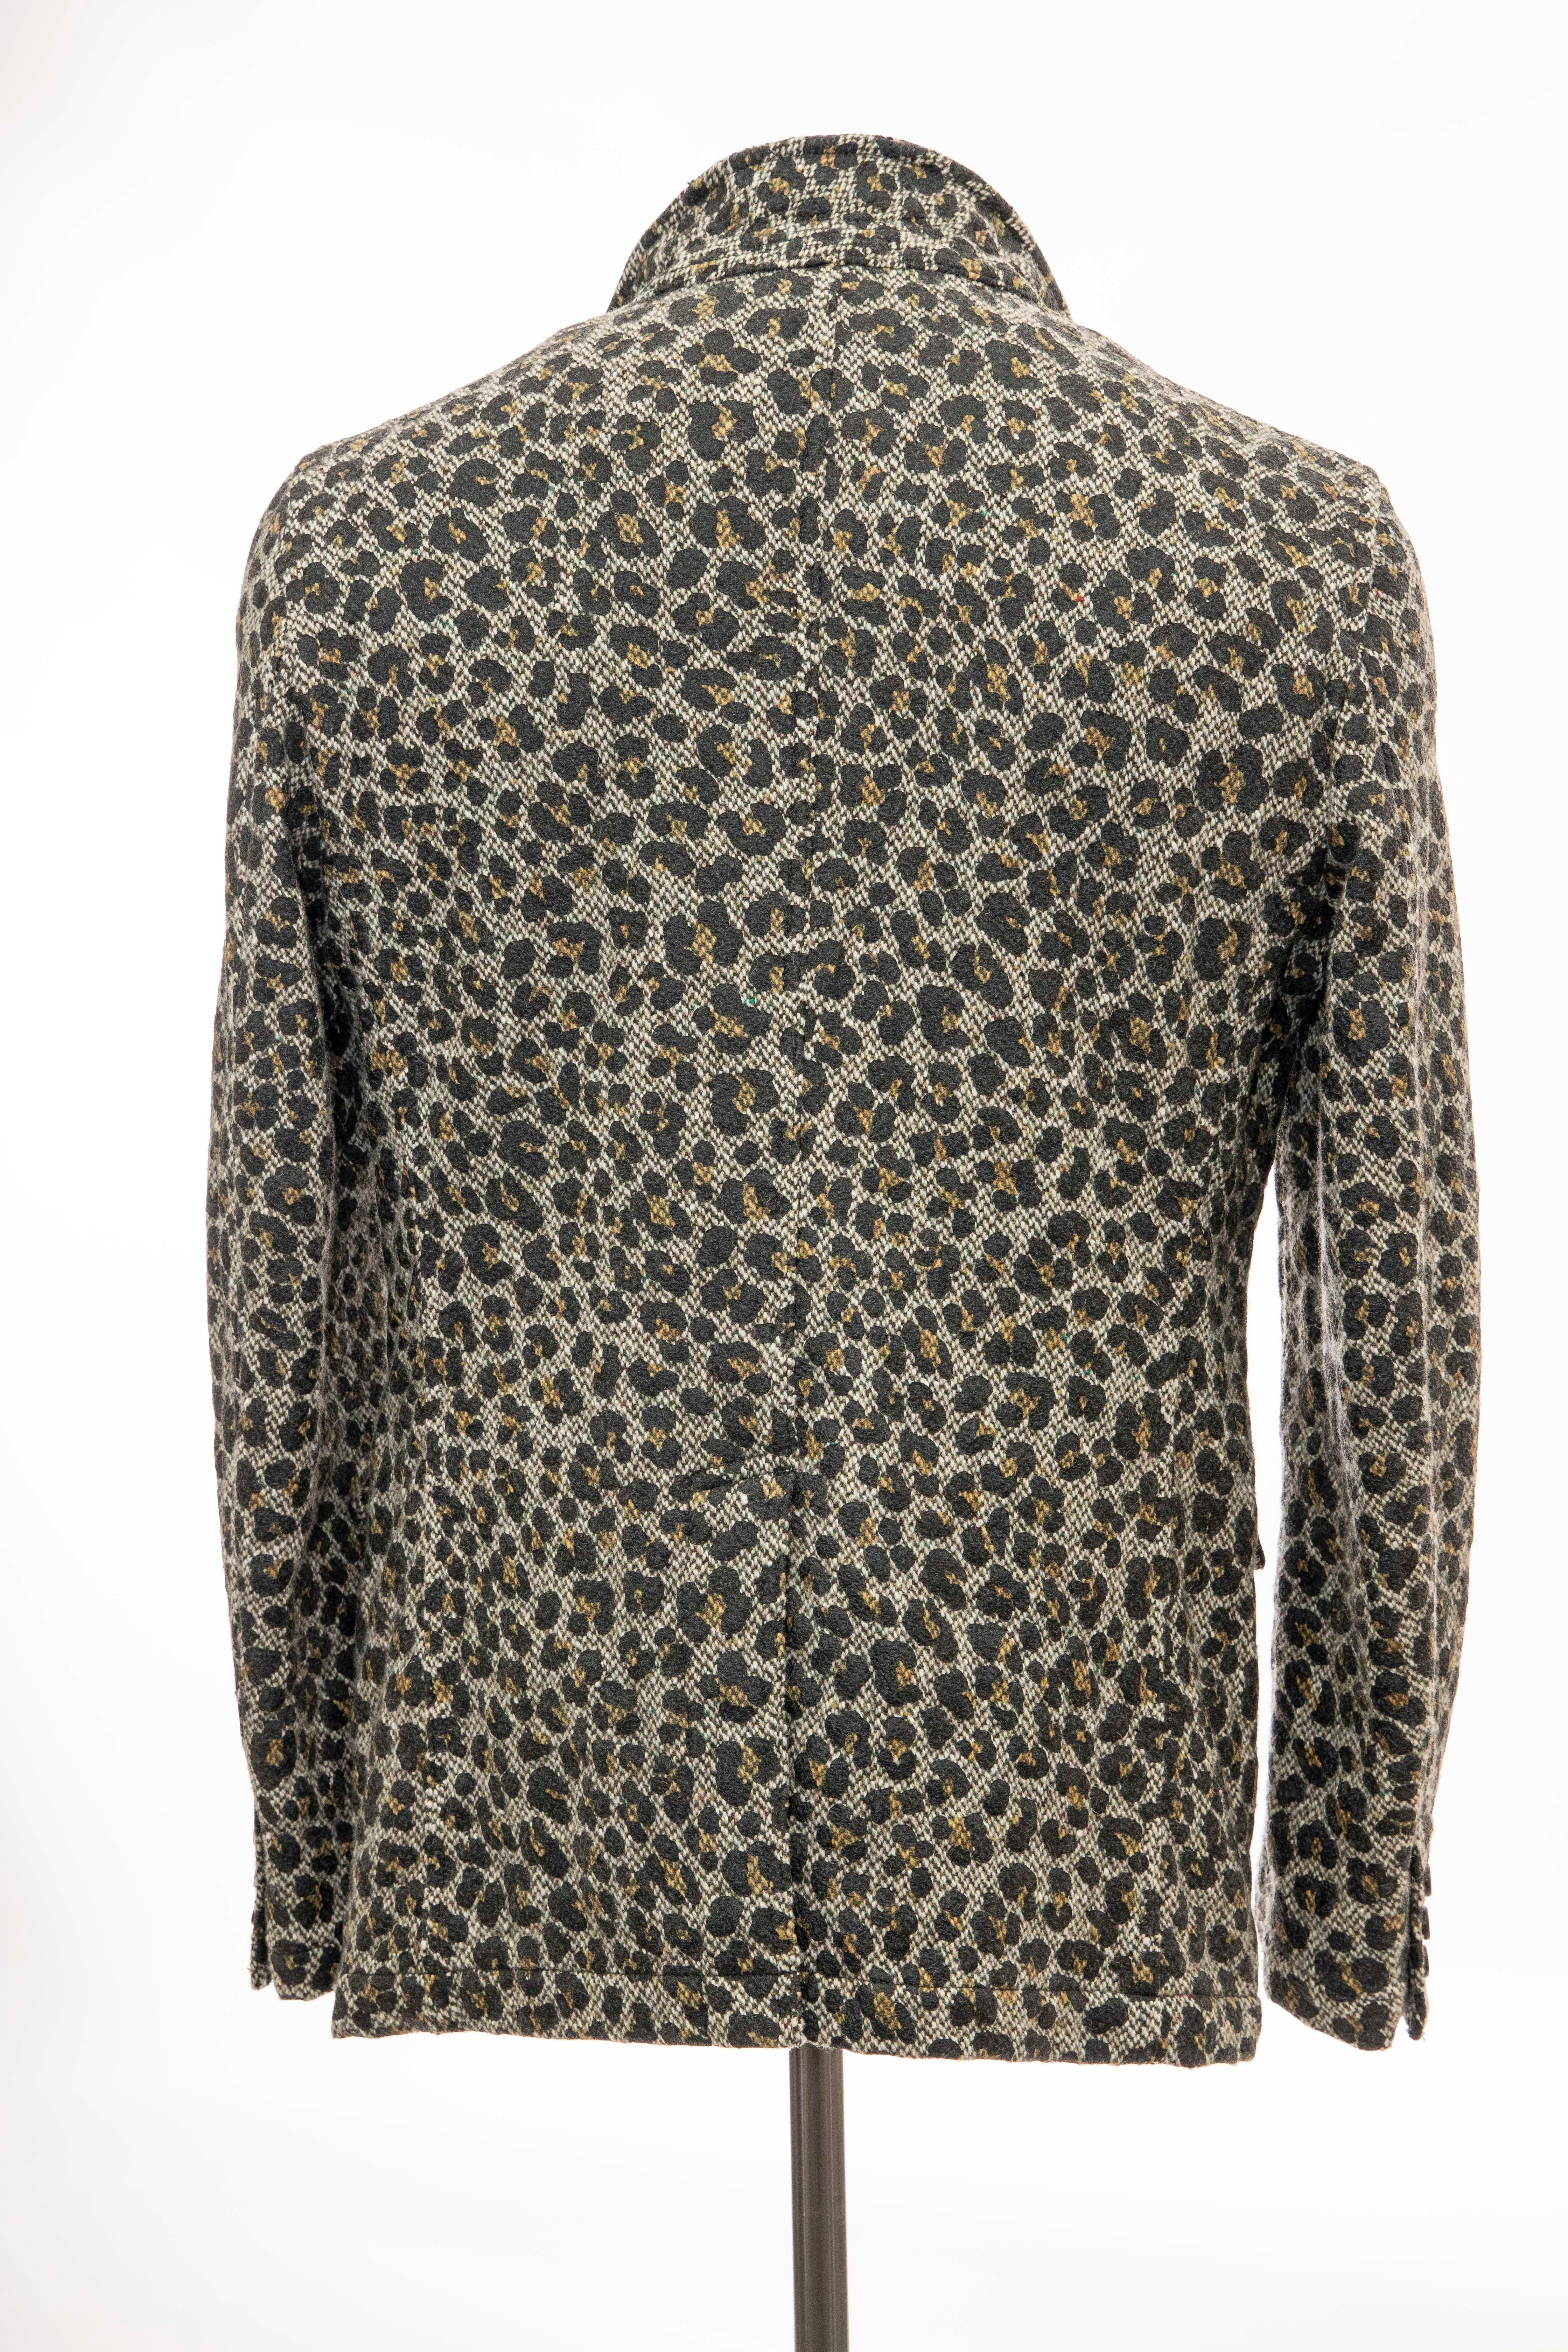 Comme des Garcons Homme Plus Wool Tweed Leopard Print Blazer, Fall 2009 Herren im Angebot